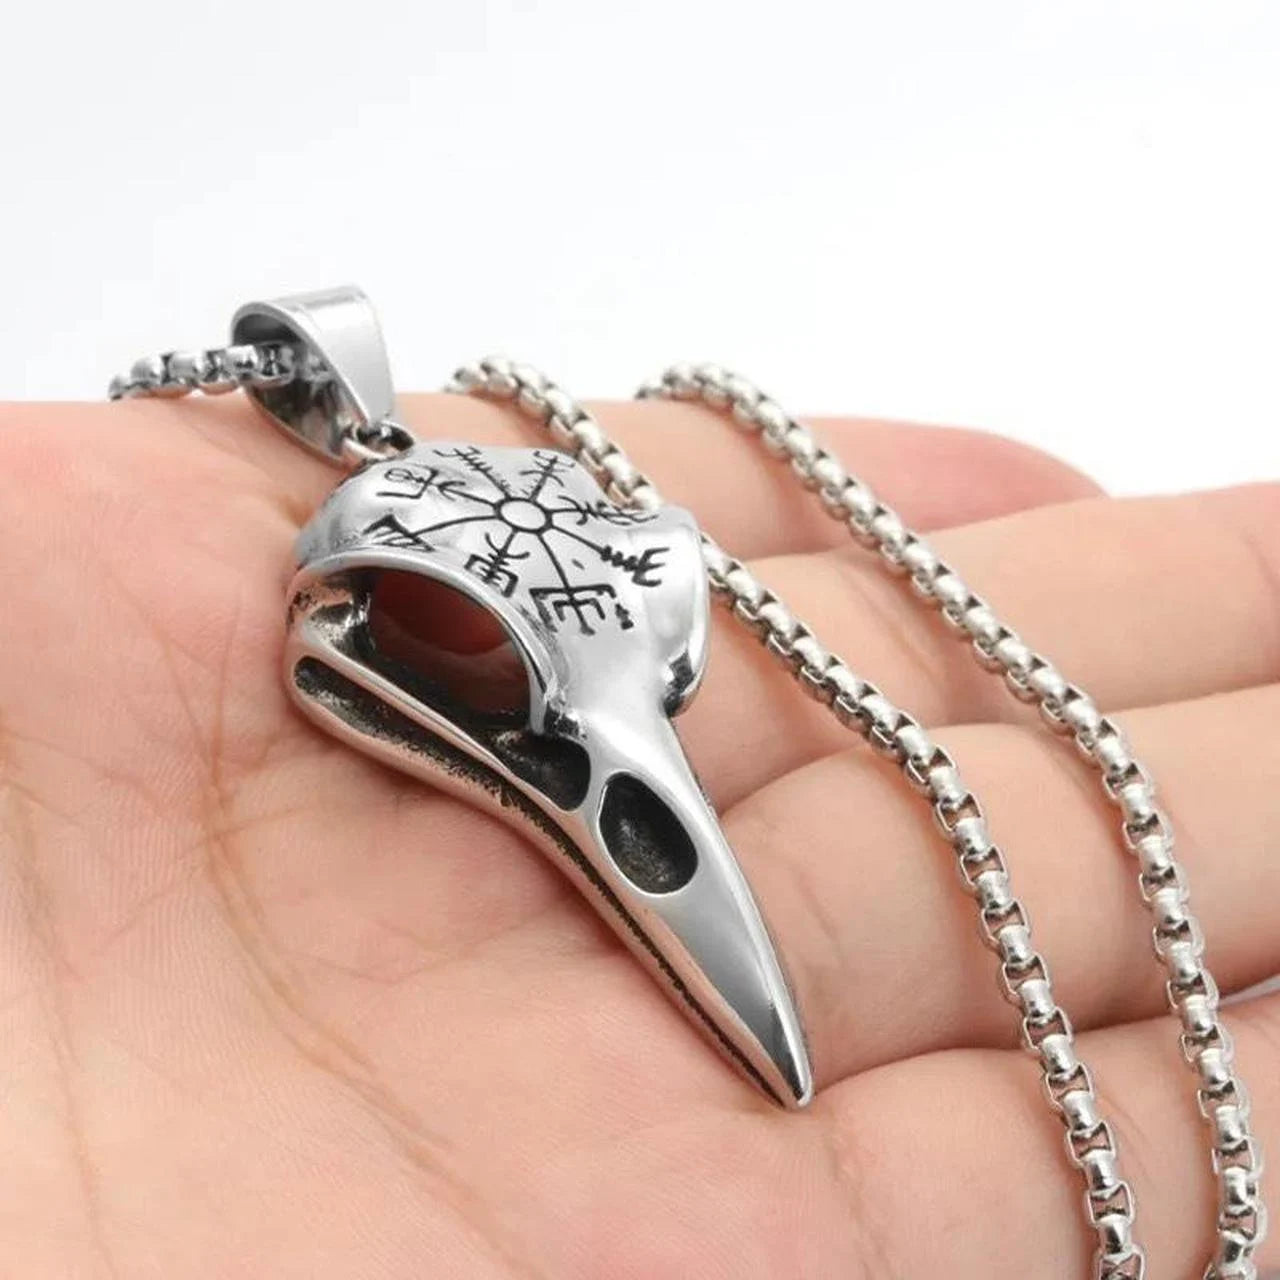 Nordic Crow Skull Necklace